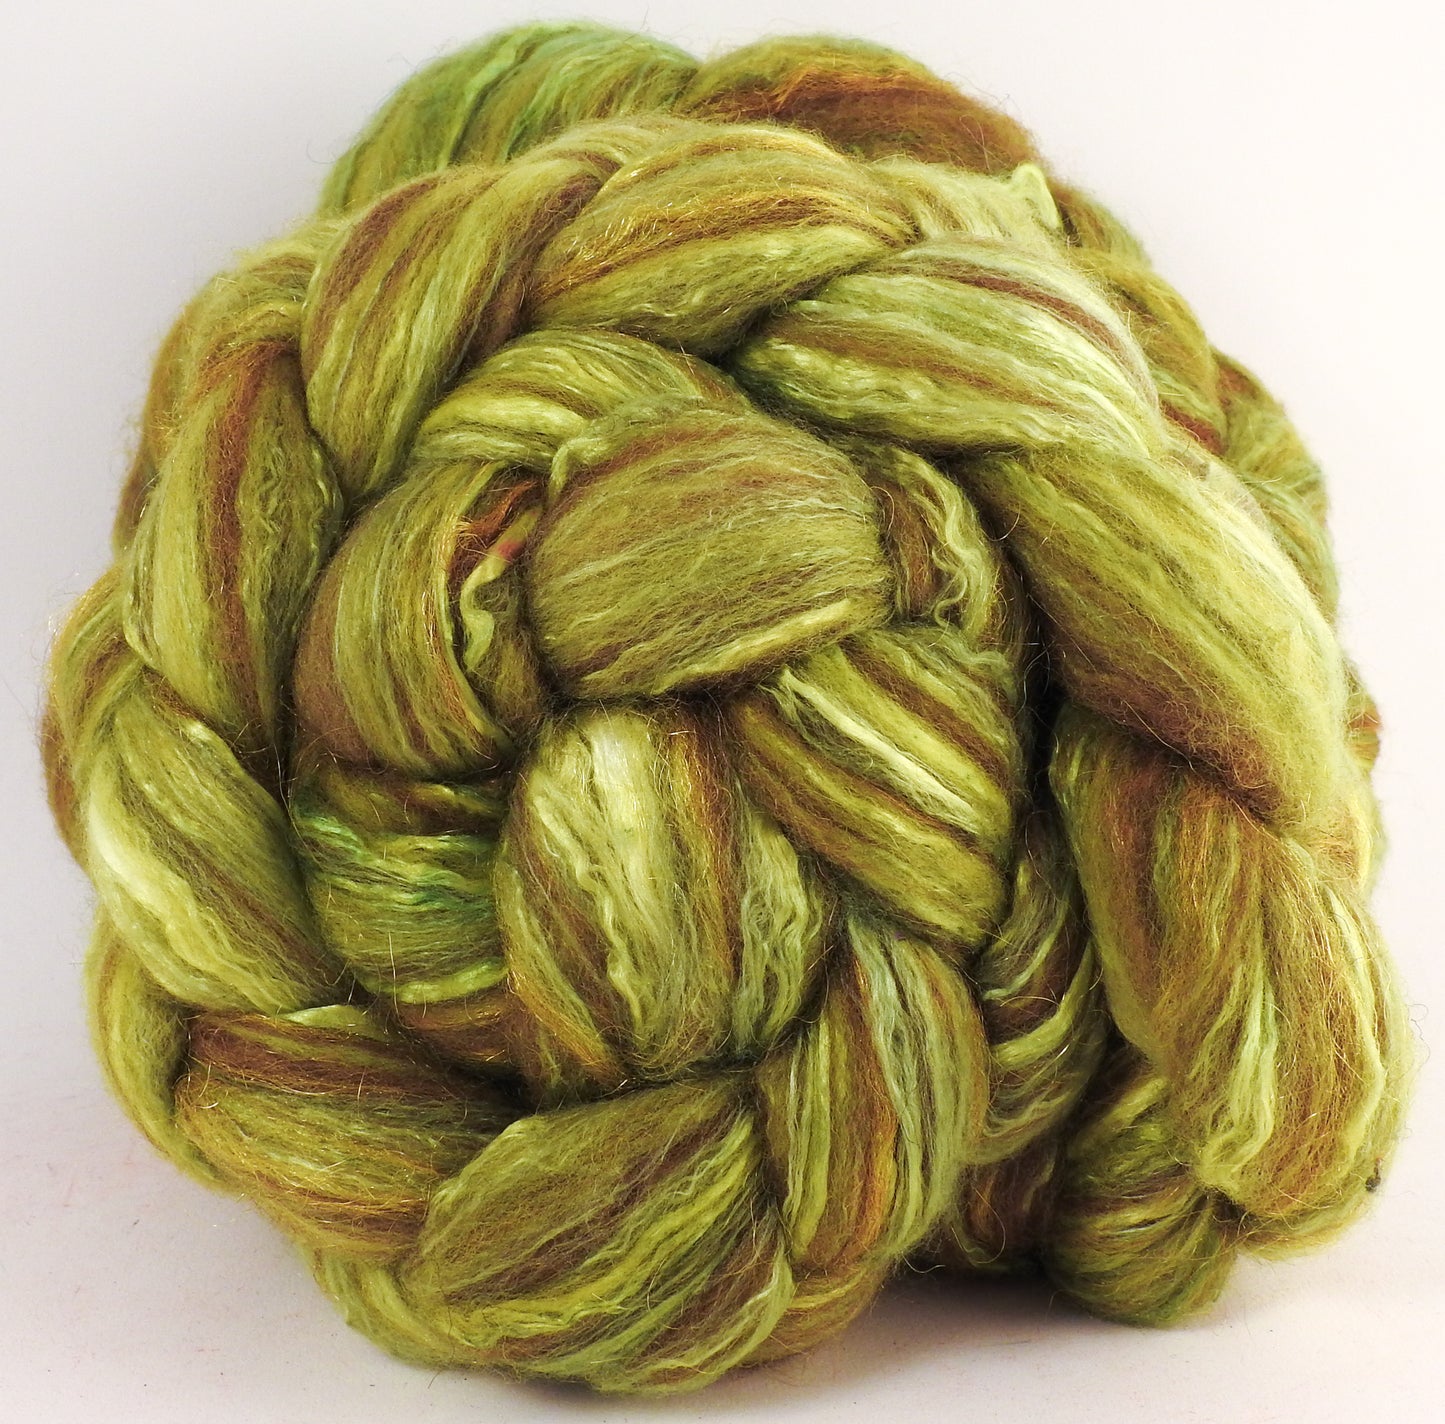 Batt in a Braid #7 - Asparagus - Polwarth/ Manx / Mulberry silk/ Firestar (30/30/30/10) - Inglenook Fibers